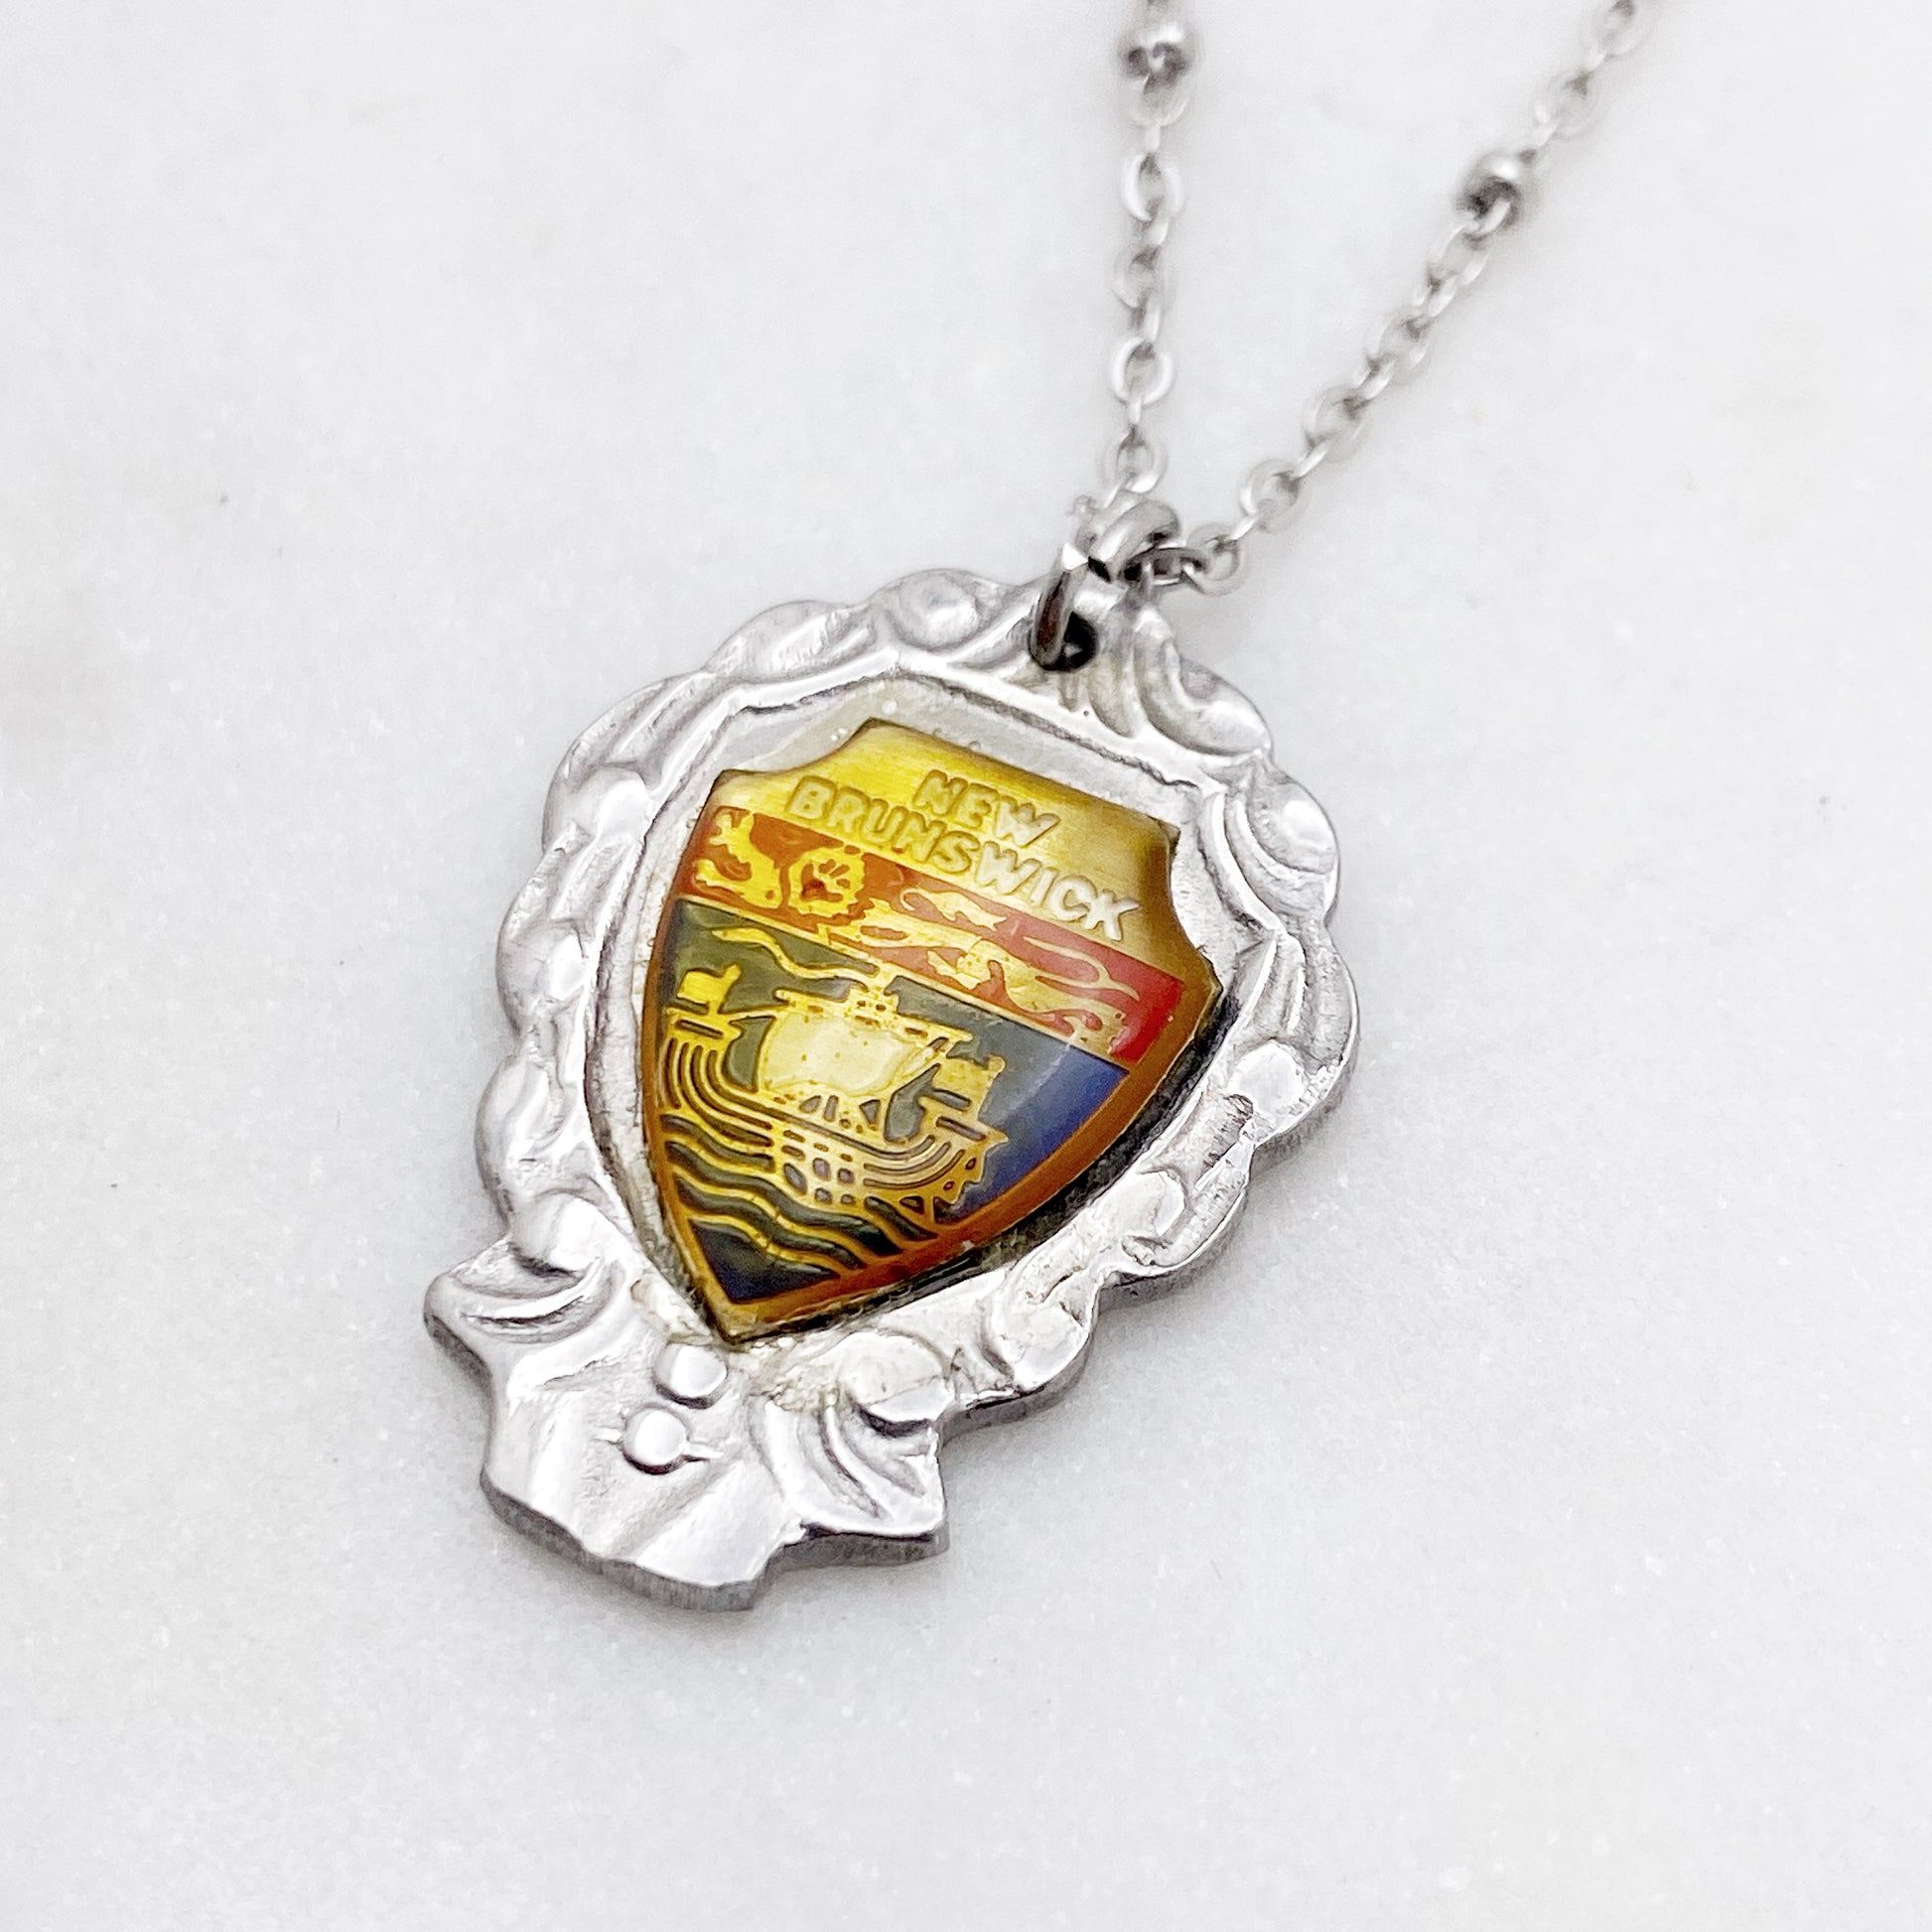 New Brunswick Pendant, Provincial Jewelry, Reclaimed Collector's Spoon Necklace, Vintage Souvenir Spoon Jewelry Necklaces callistafaye   